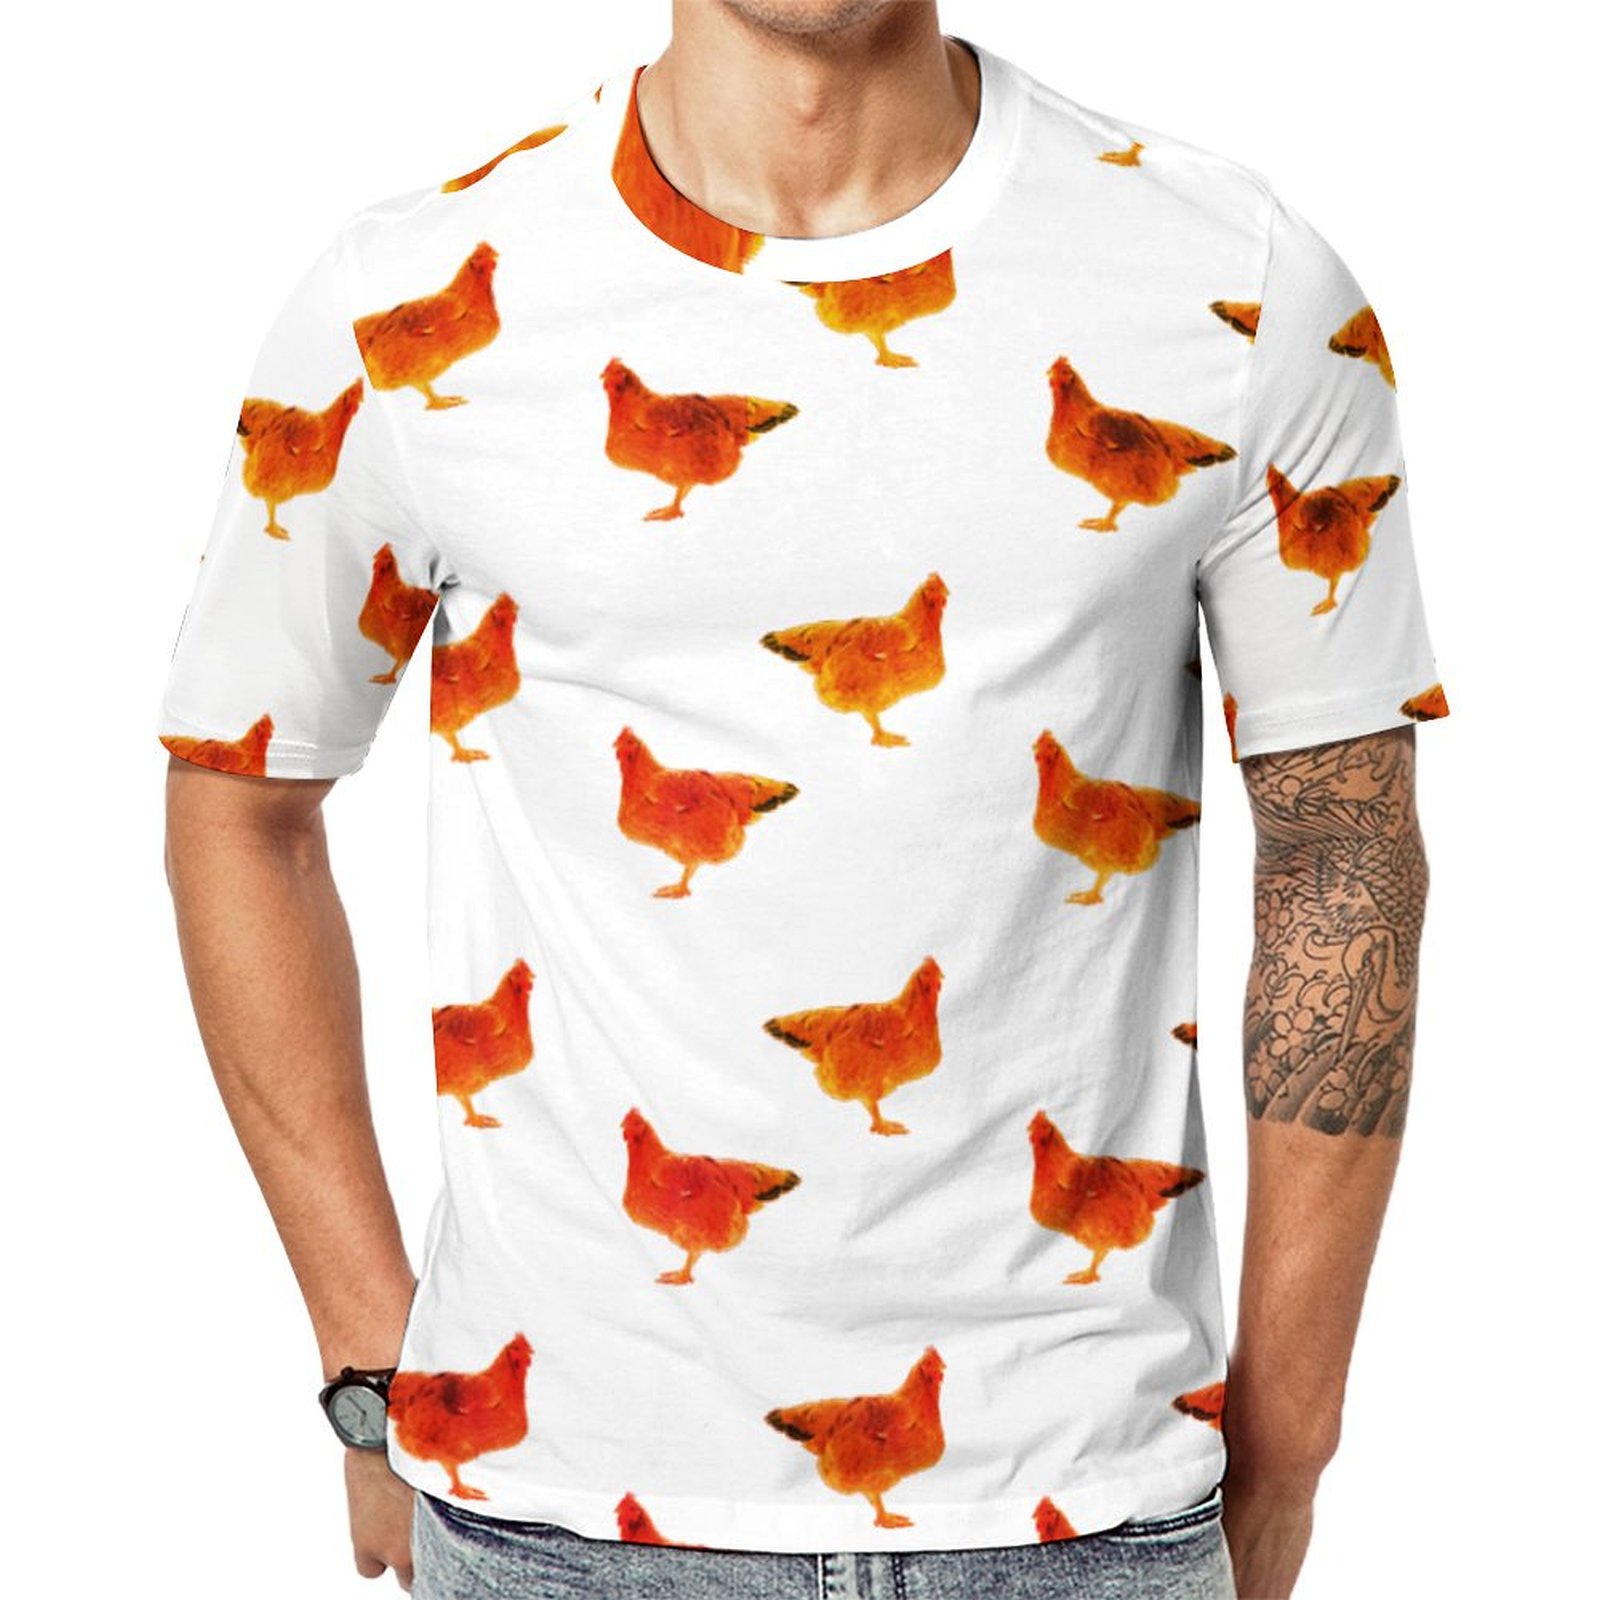 Gallina Chicken Short Sleeve Print Unisex Tshirt Summer Casual Tees for Men and Women Coolcoshirts